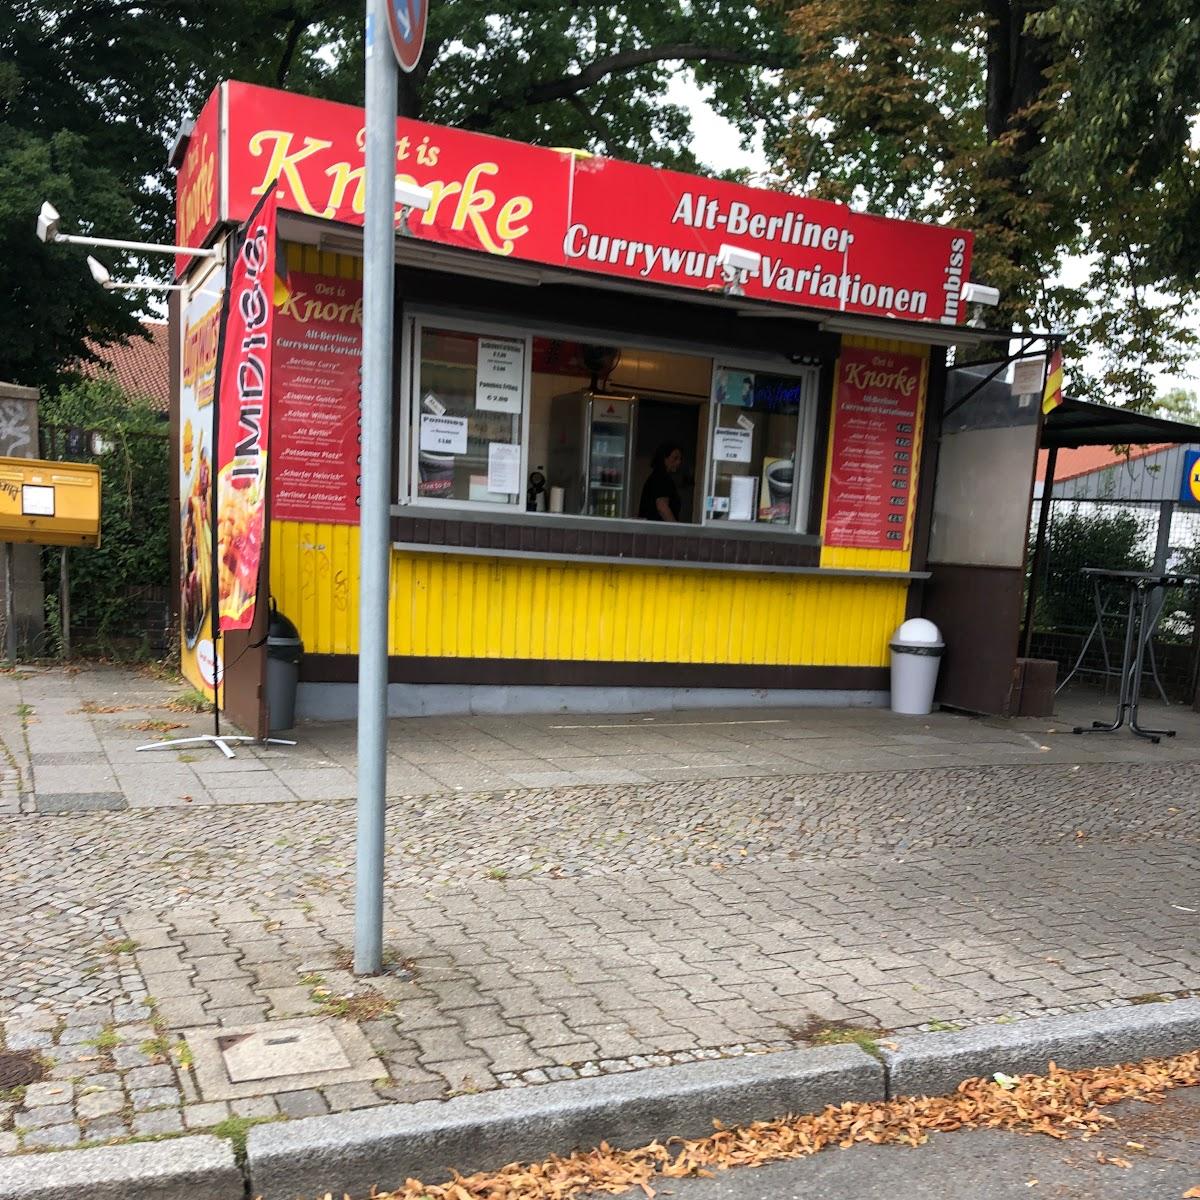 Restaurant "Det Is Knorke" in Berlin